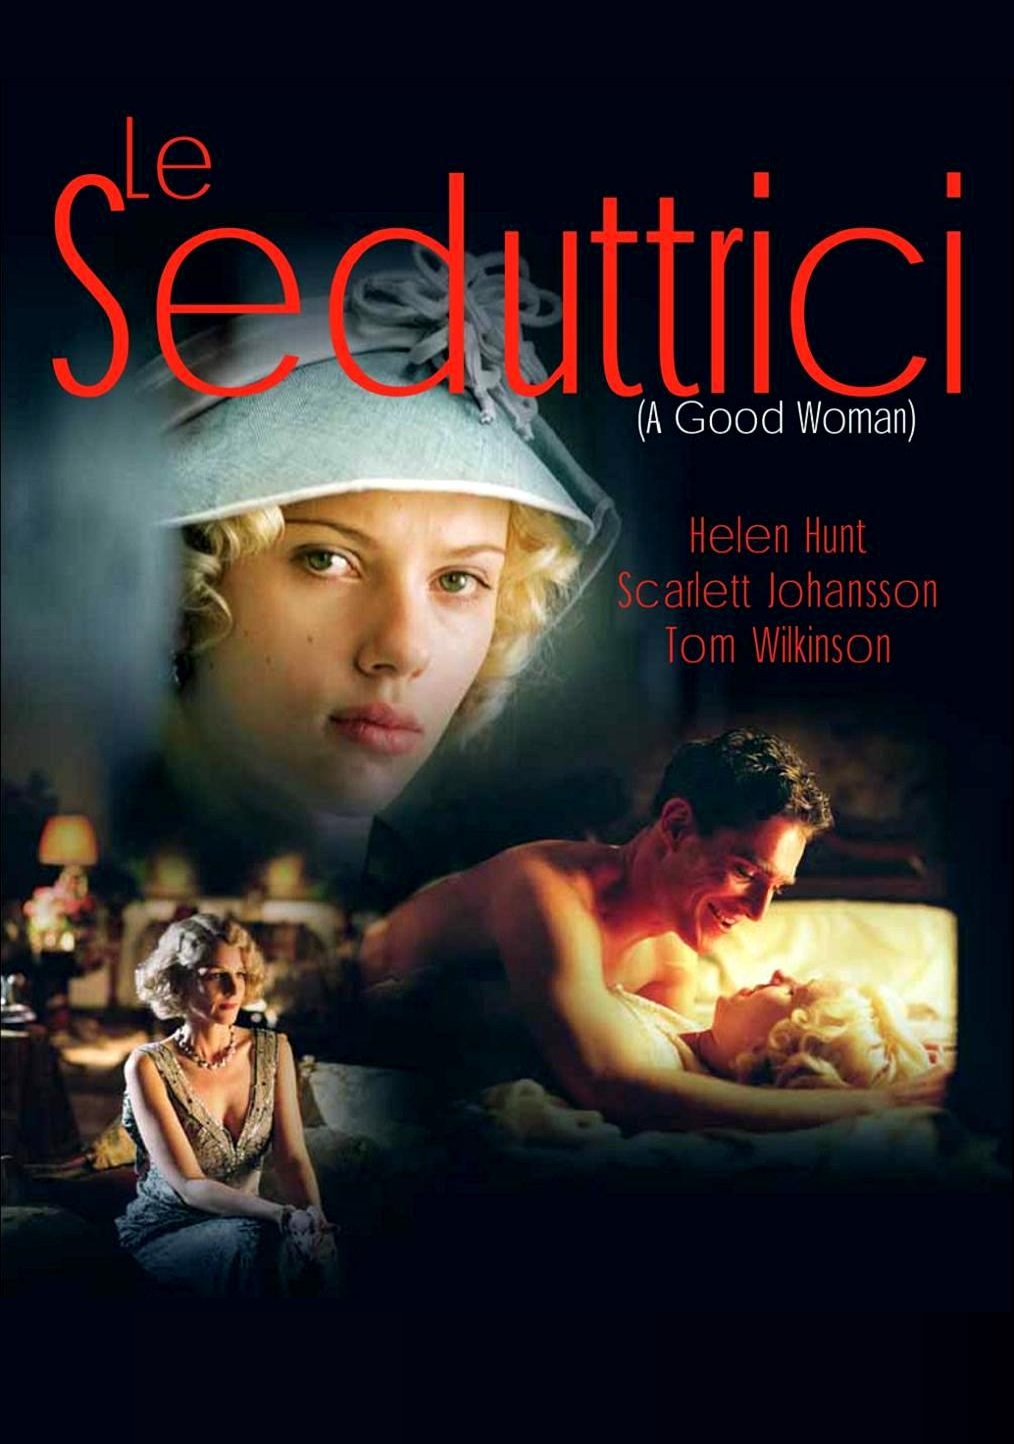 Le seduttrici (2004)